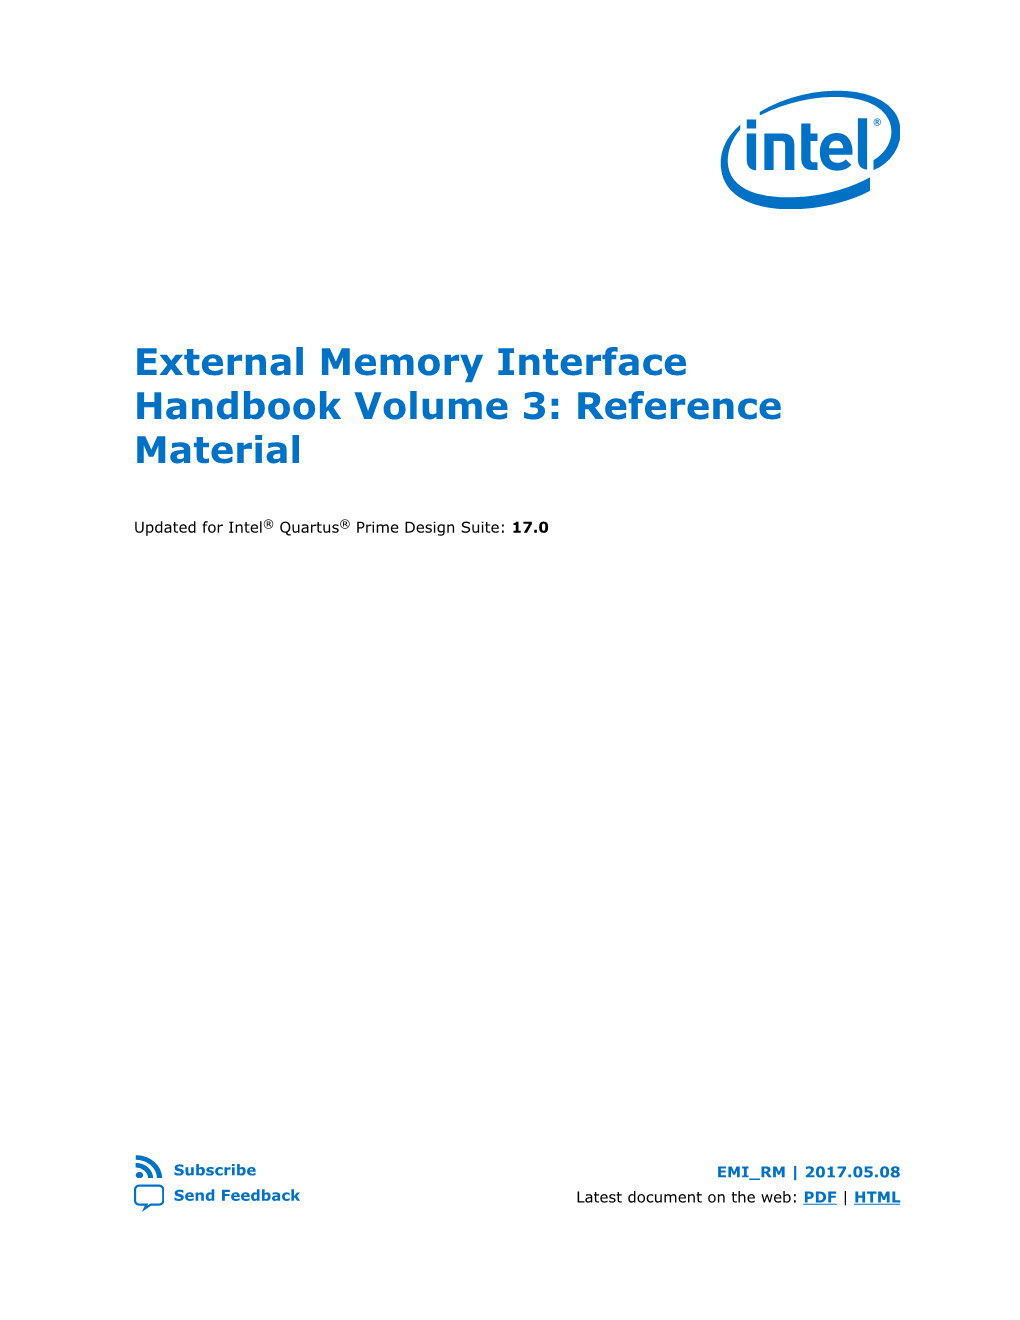 External Memory Interface Handbook Volume 3: Reference Material